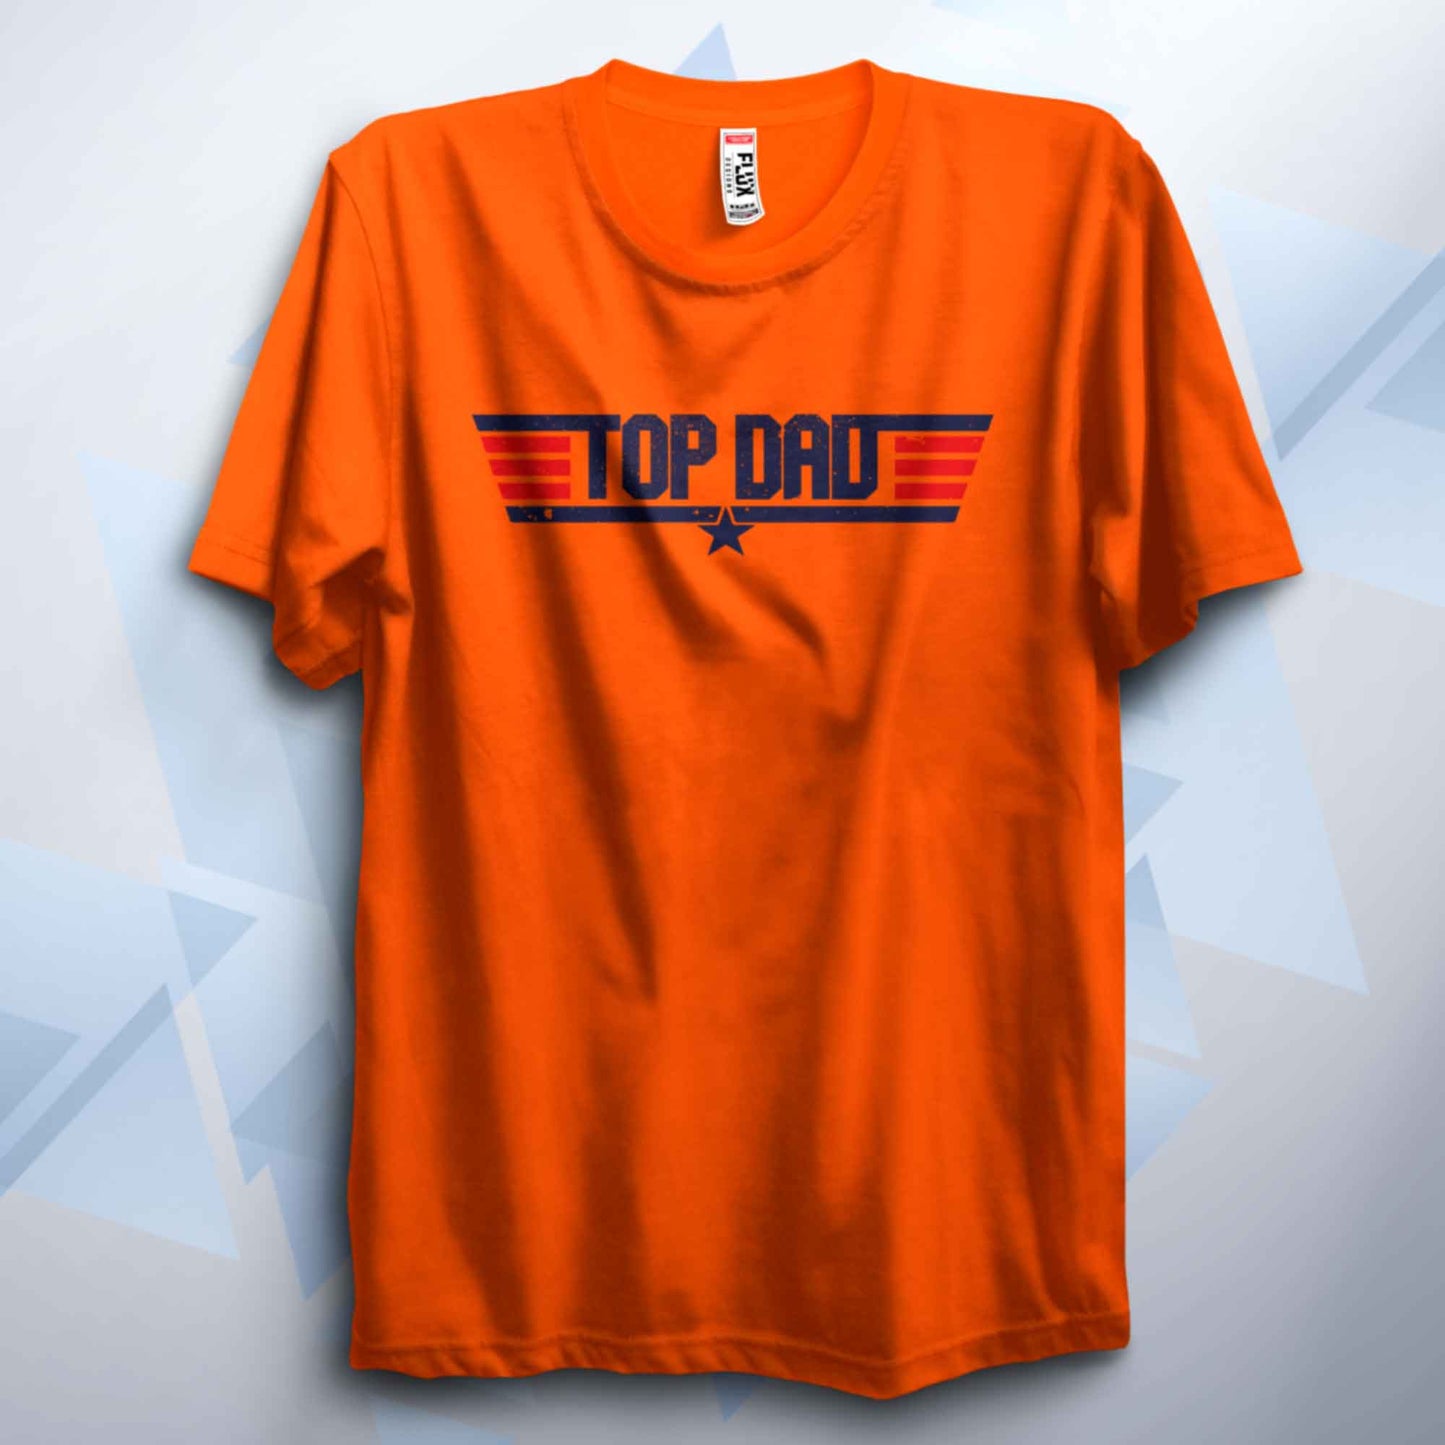 Top Dad Distressed Logo T Shirt